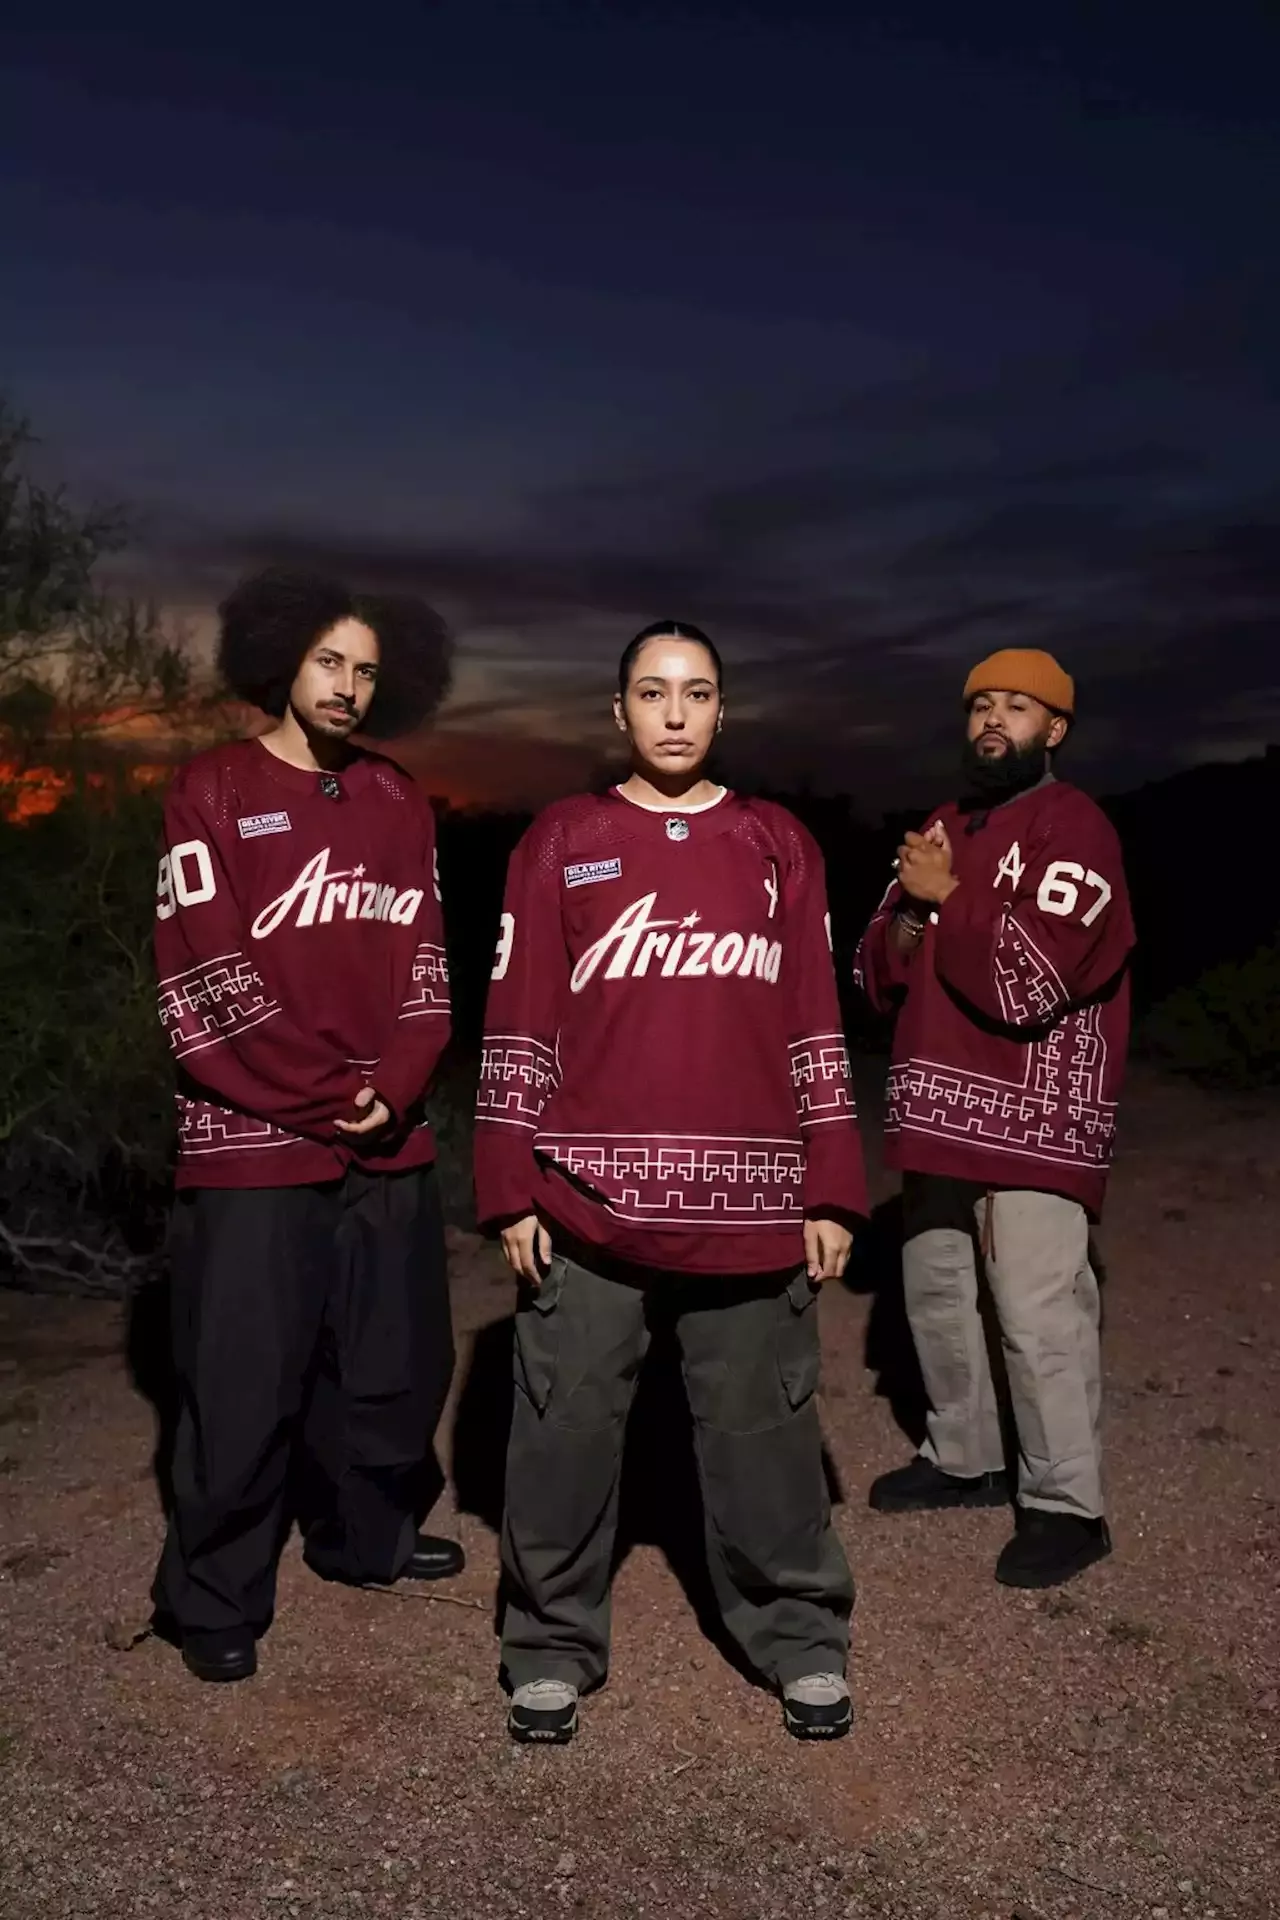 Arizona Coyotes reveal Desert Night jersey designed by Rhuigi